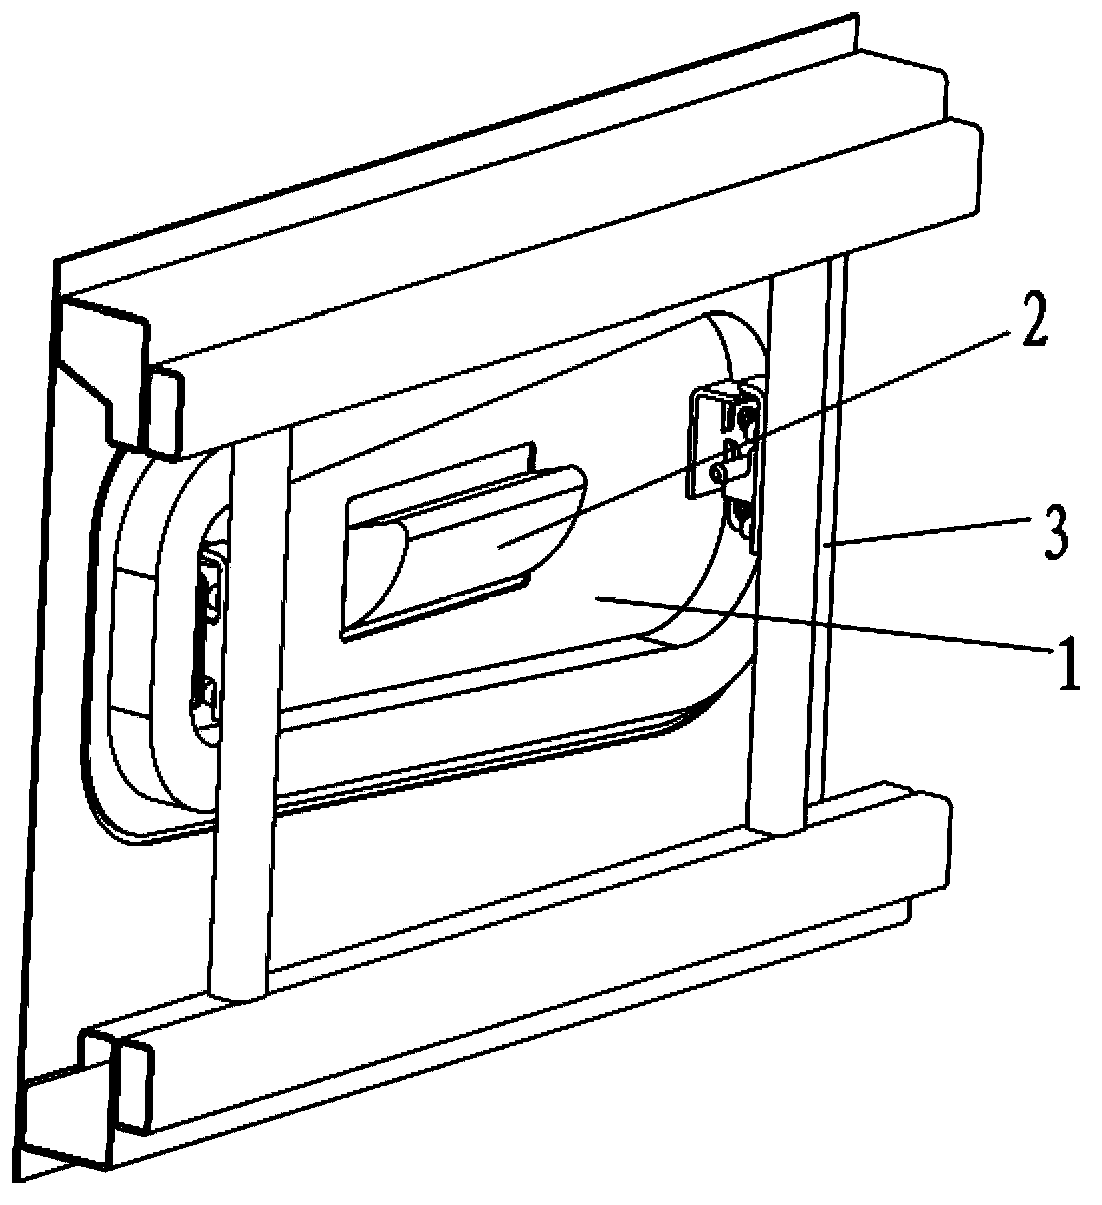 Side compartment door mounting hinge